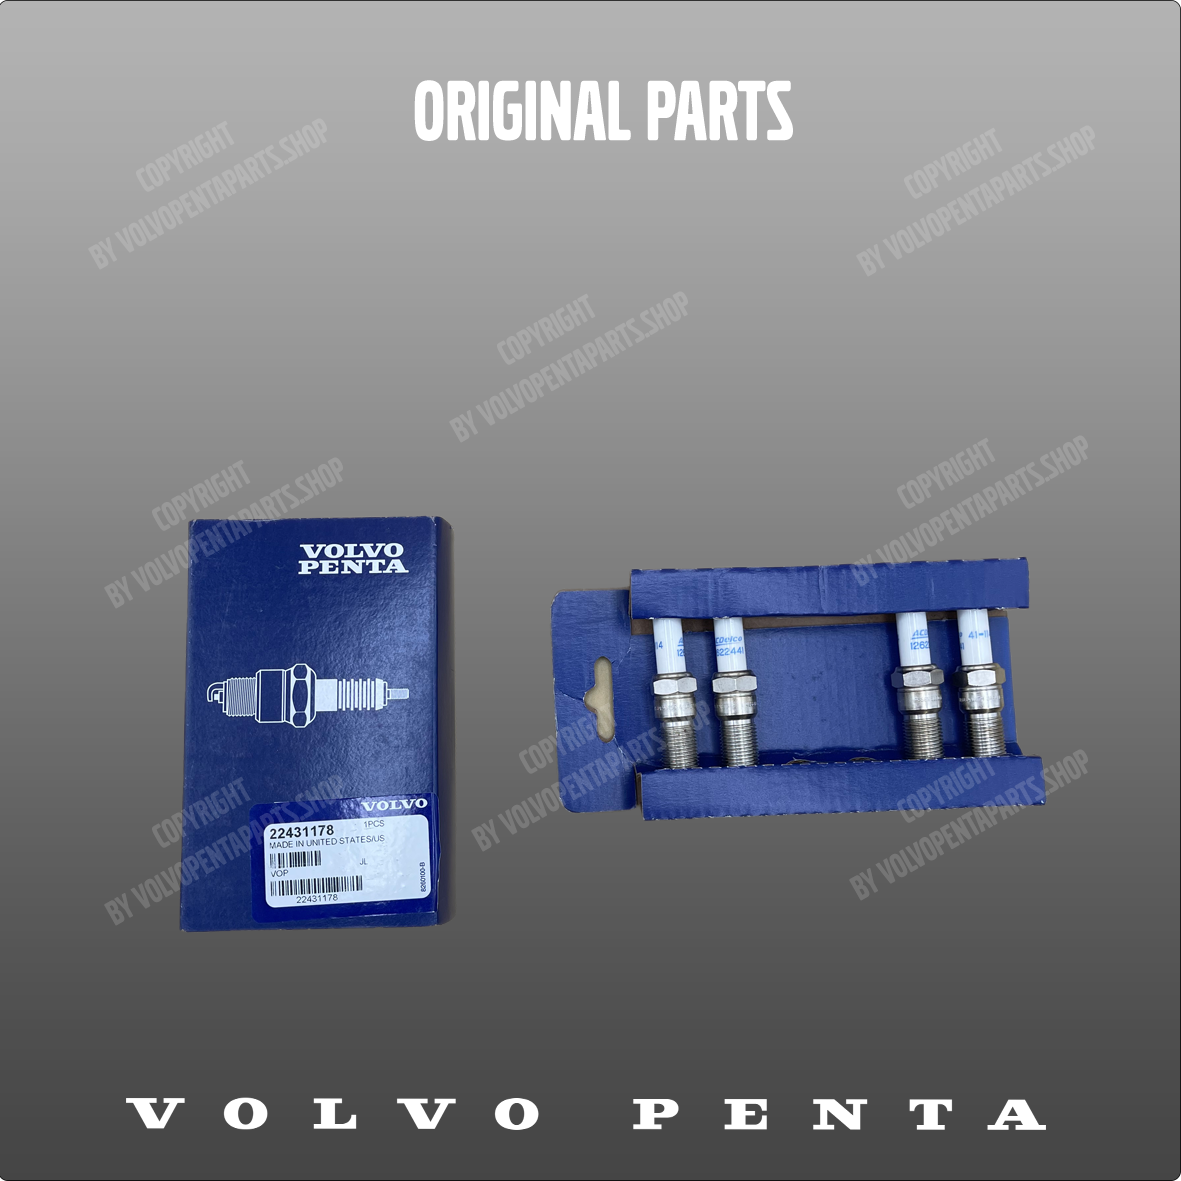 Volvo Penta spark plug kit 22431178